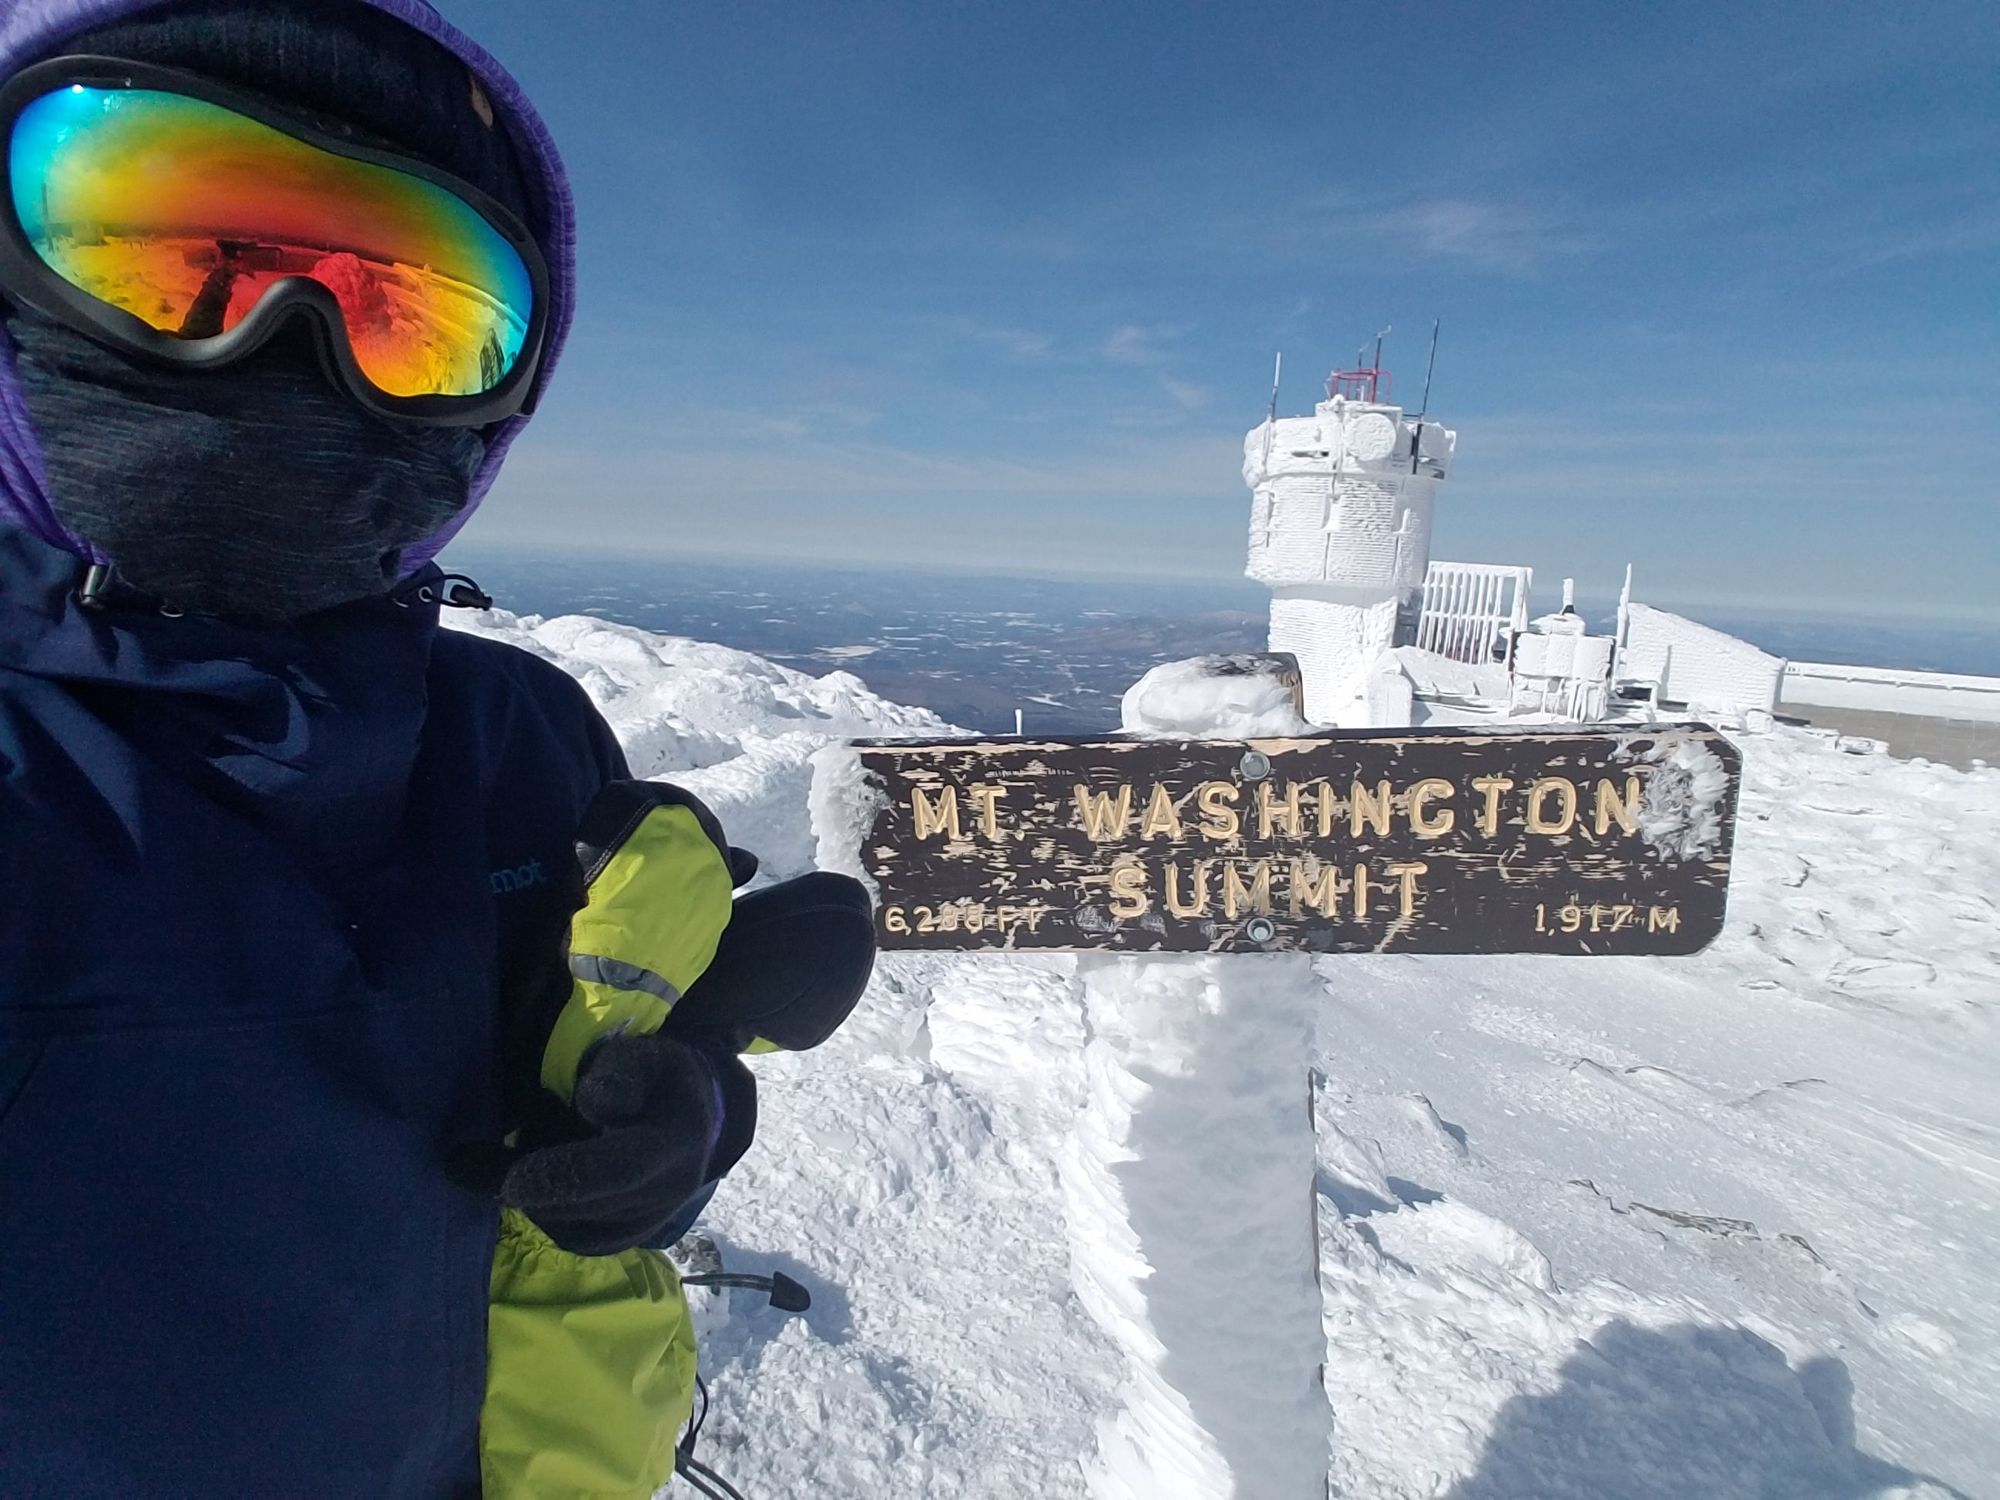 A woman poses on the summit of Mount Washington.